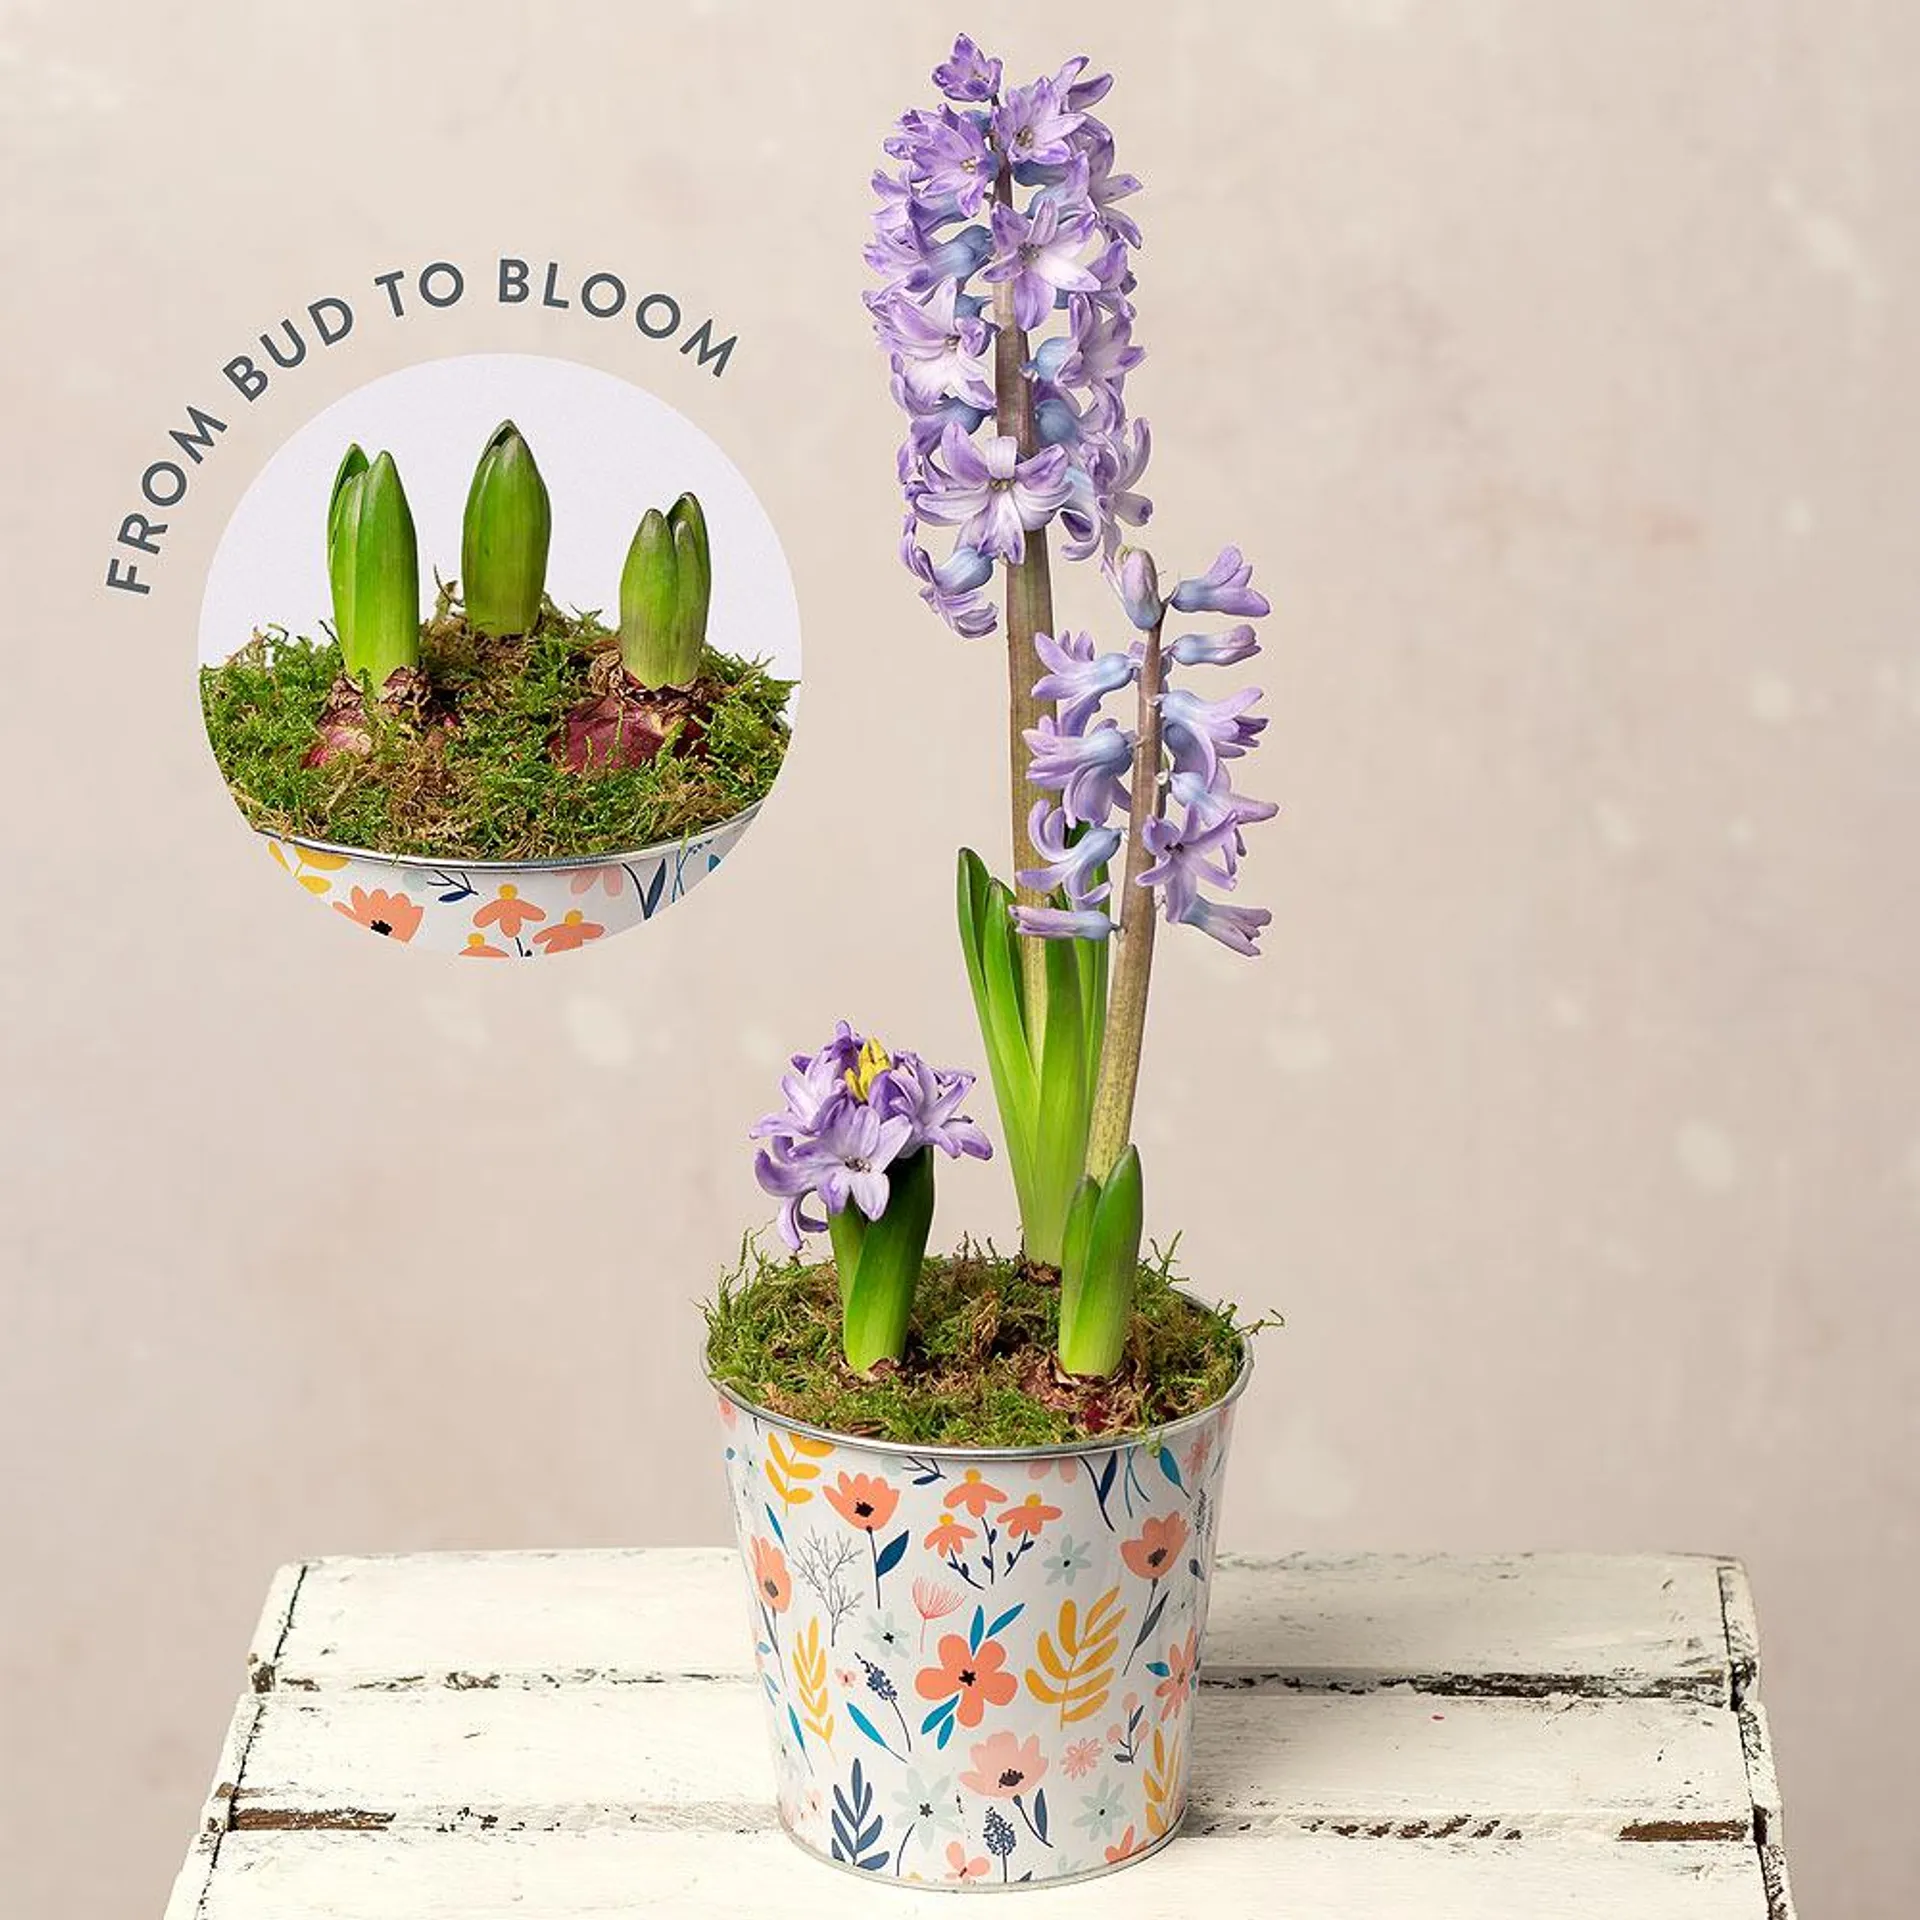 Hyacinth Bulb Planter